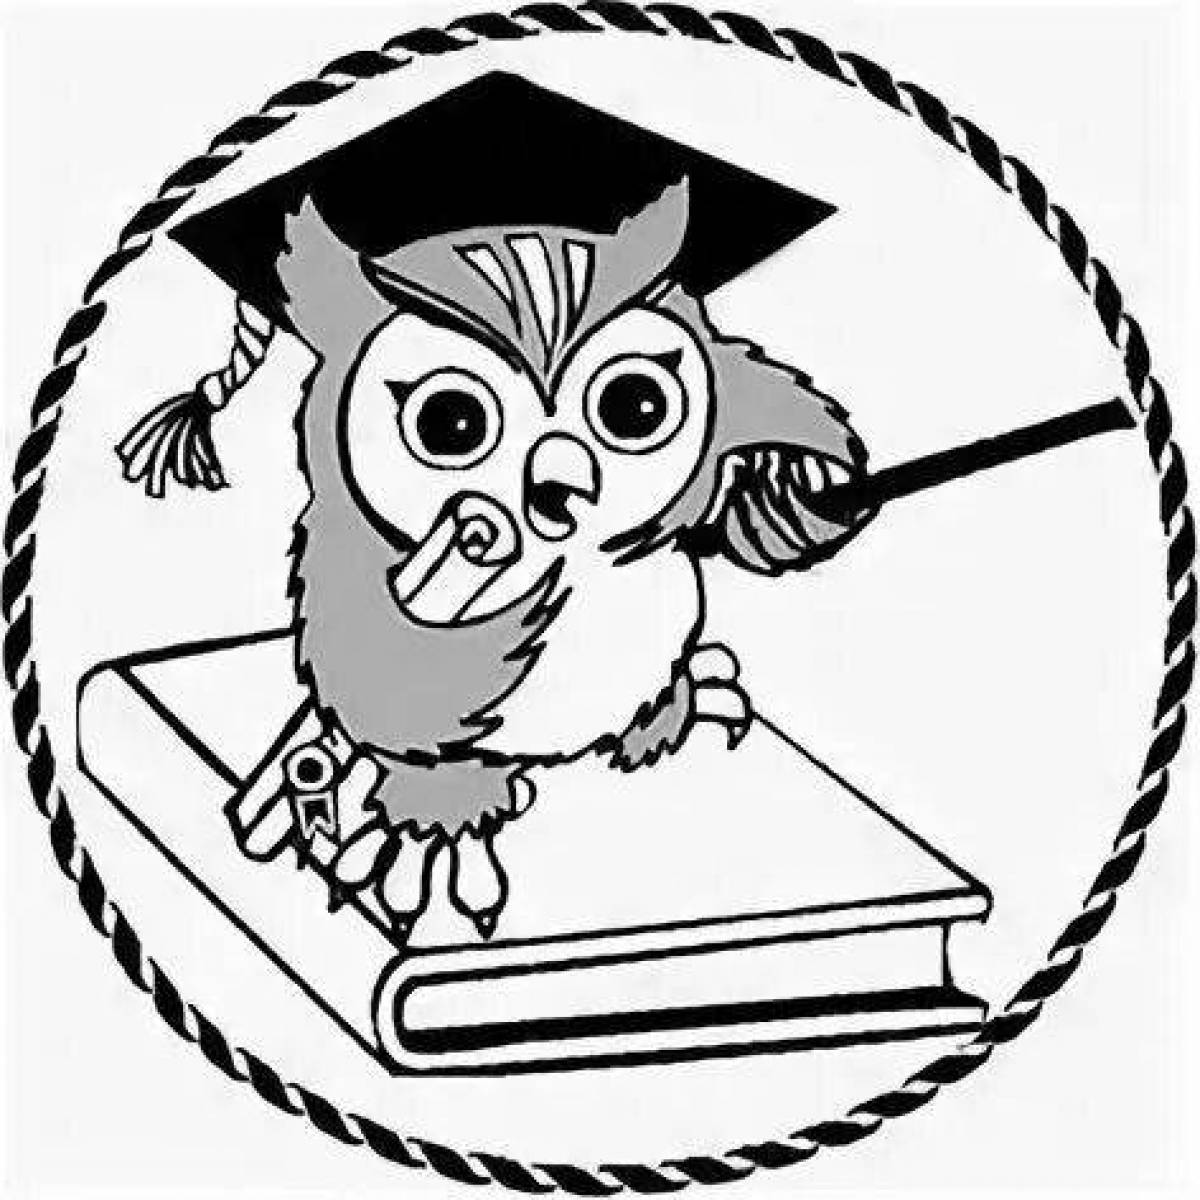 Exquisite smart owl coloring book